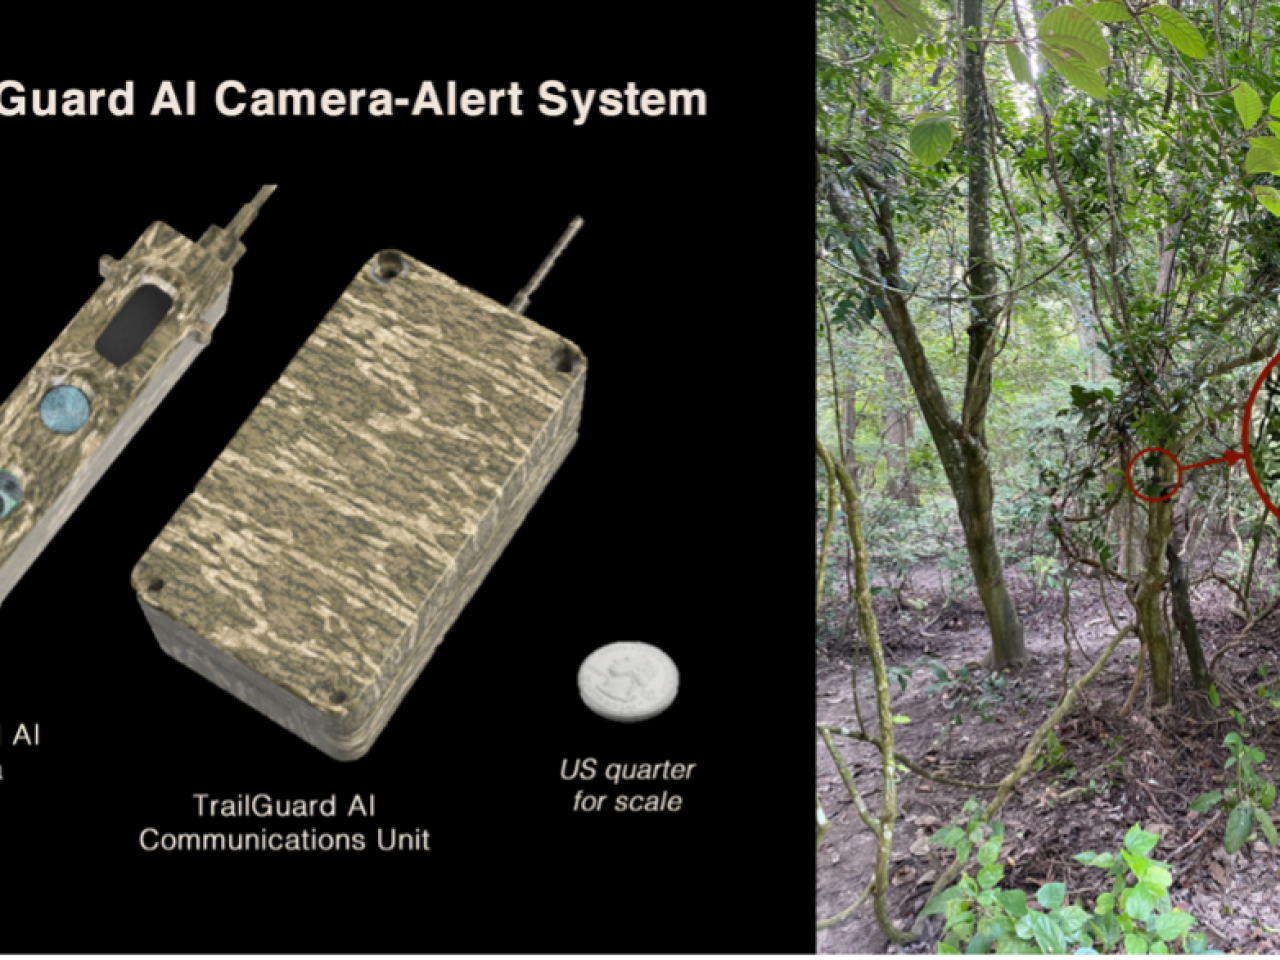 TrailGuard AI camera system